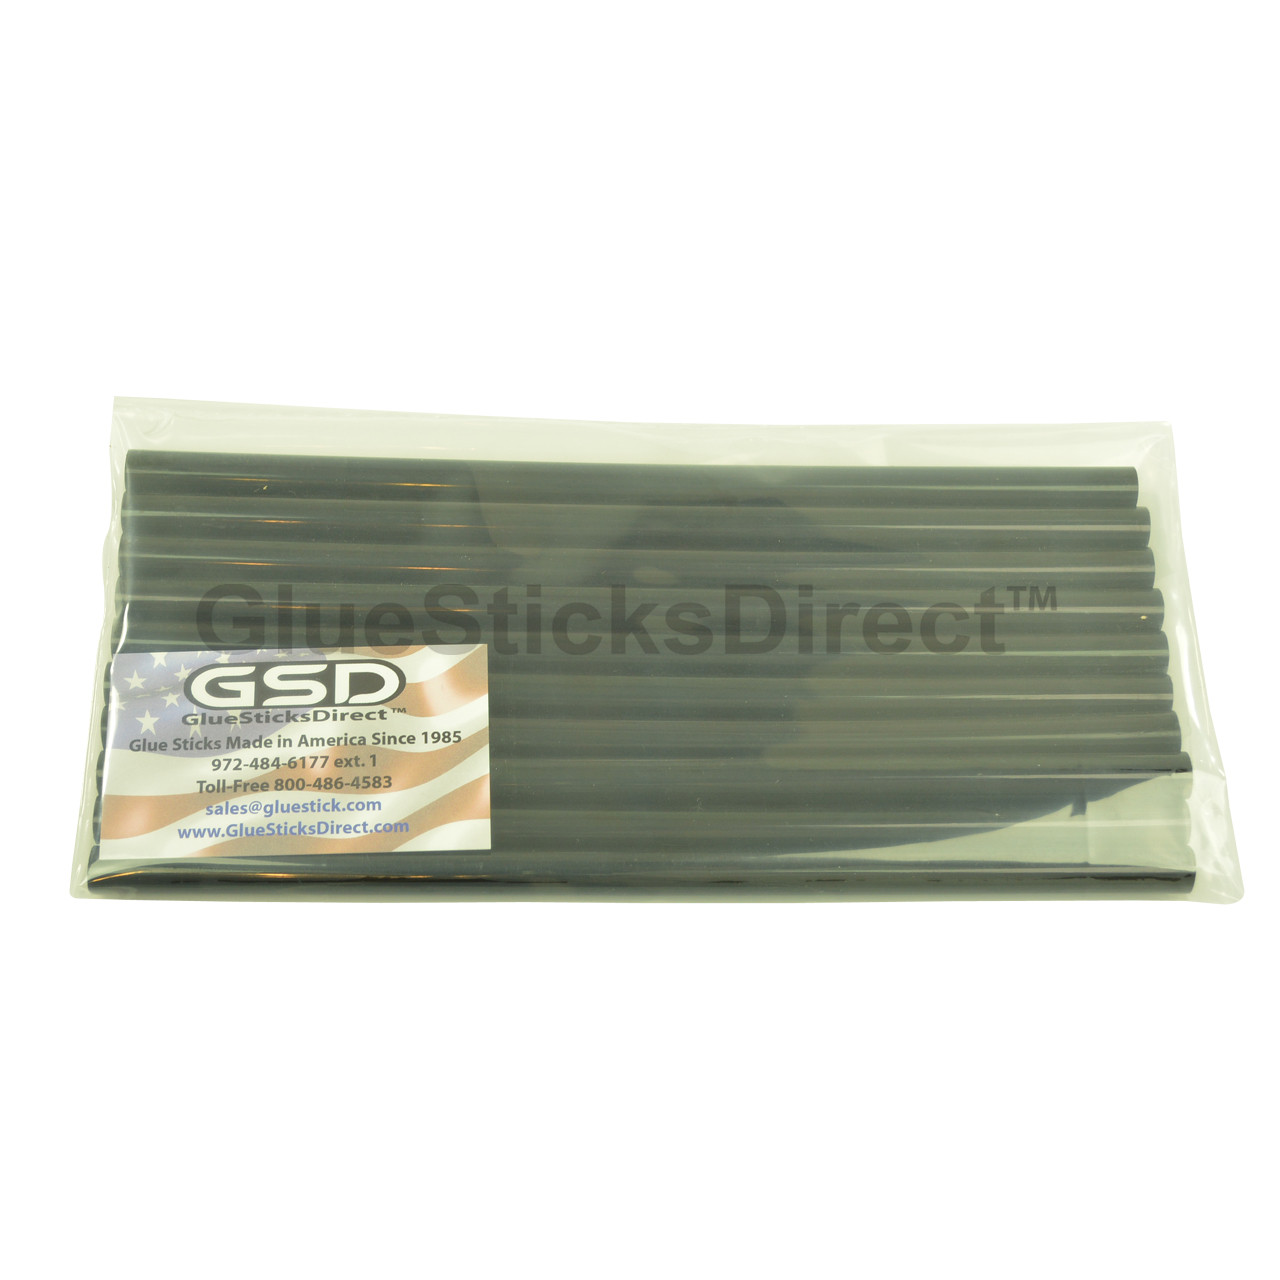 GlueSticksDirect Black Colored Glue Sticks 7/16 X 4 5 lbs -  GlueSticksDirect